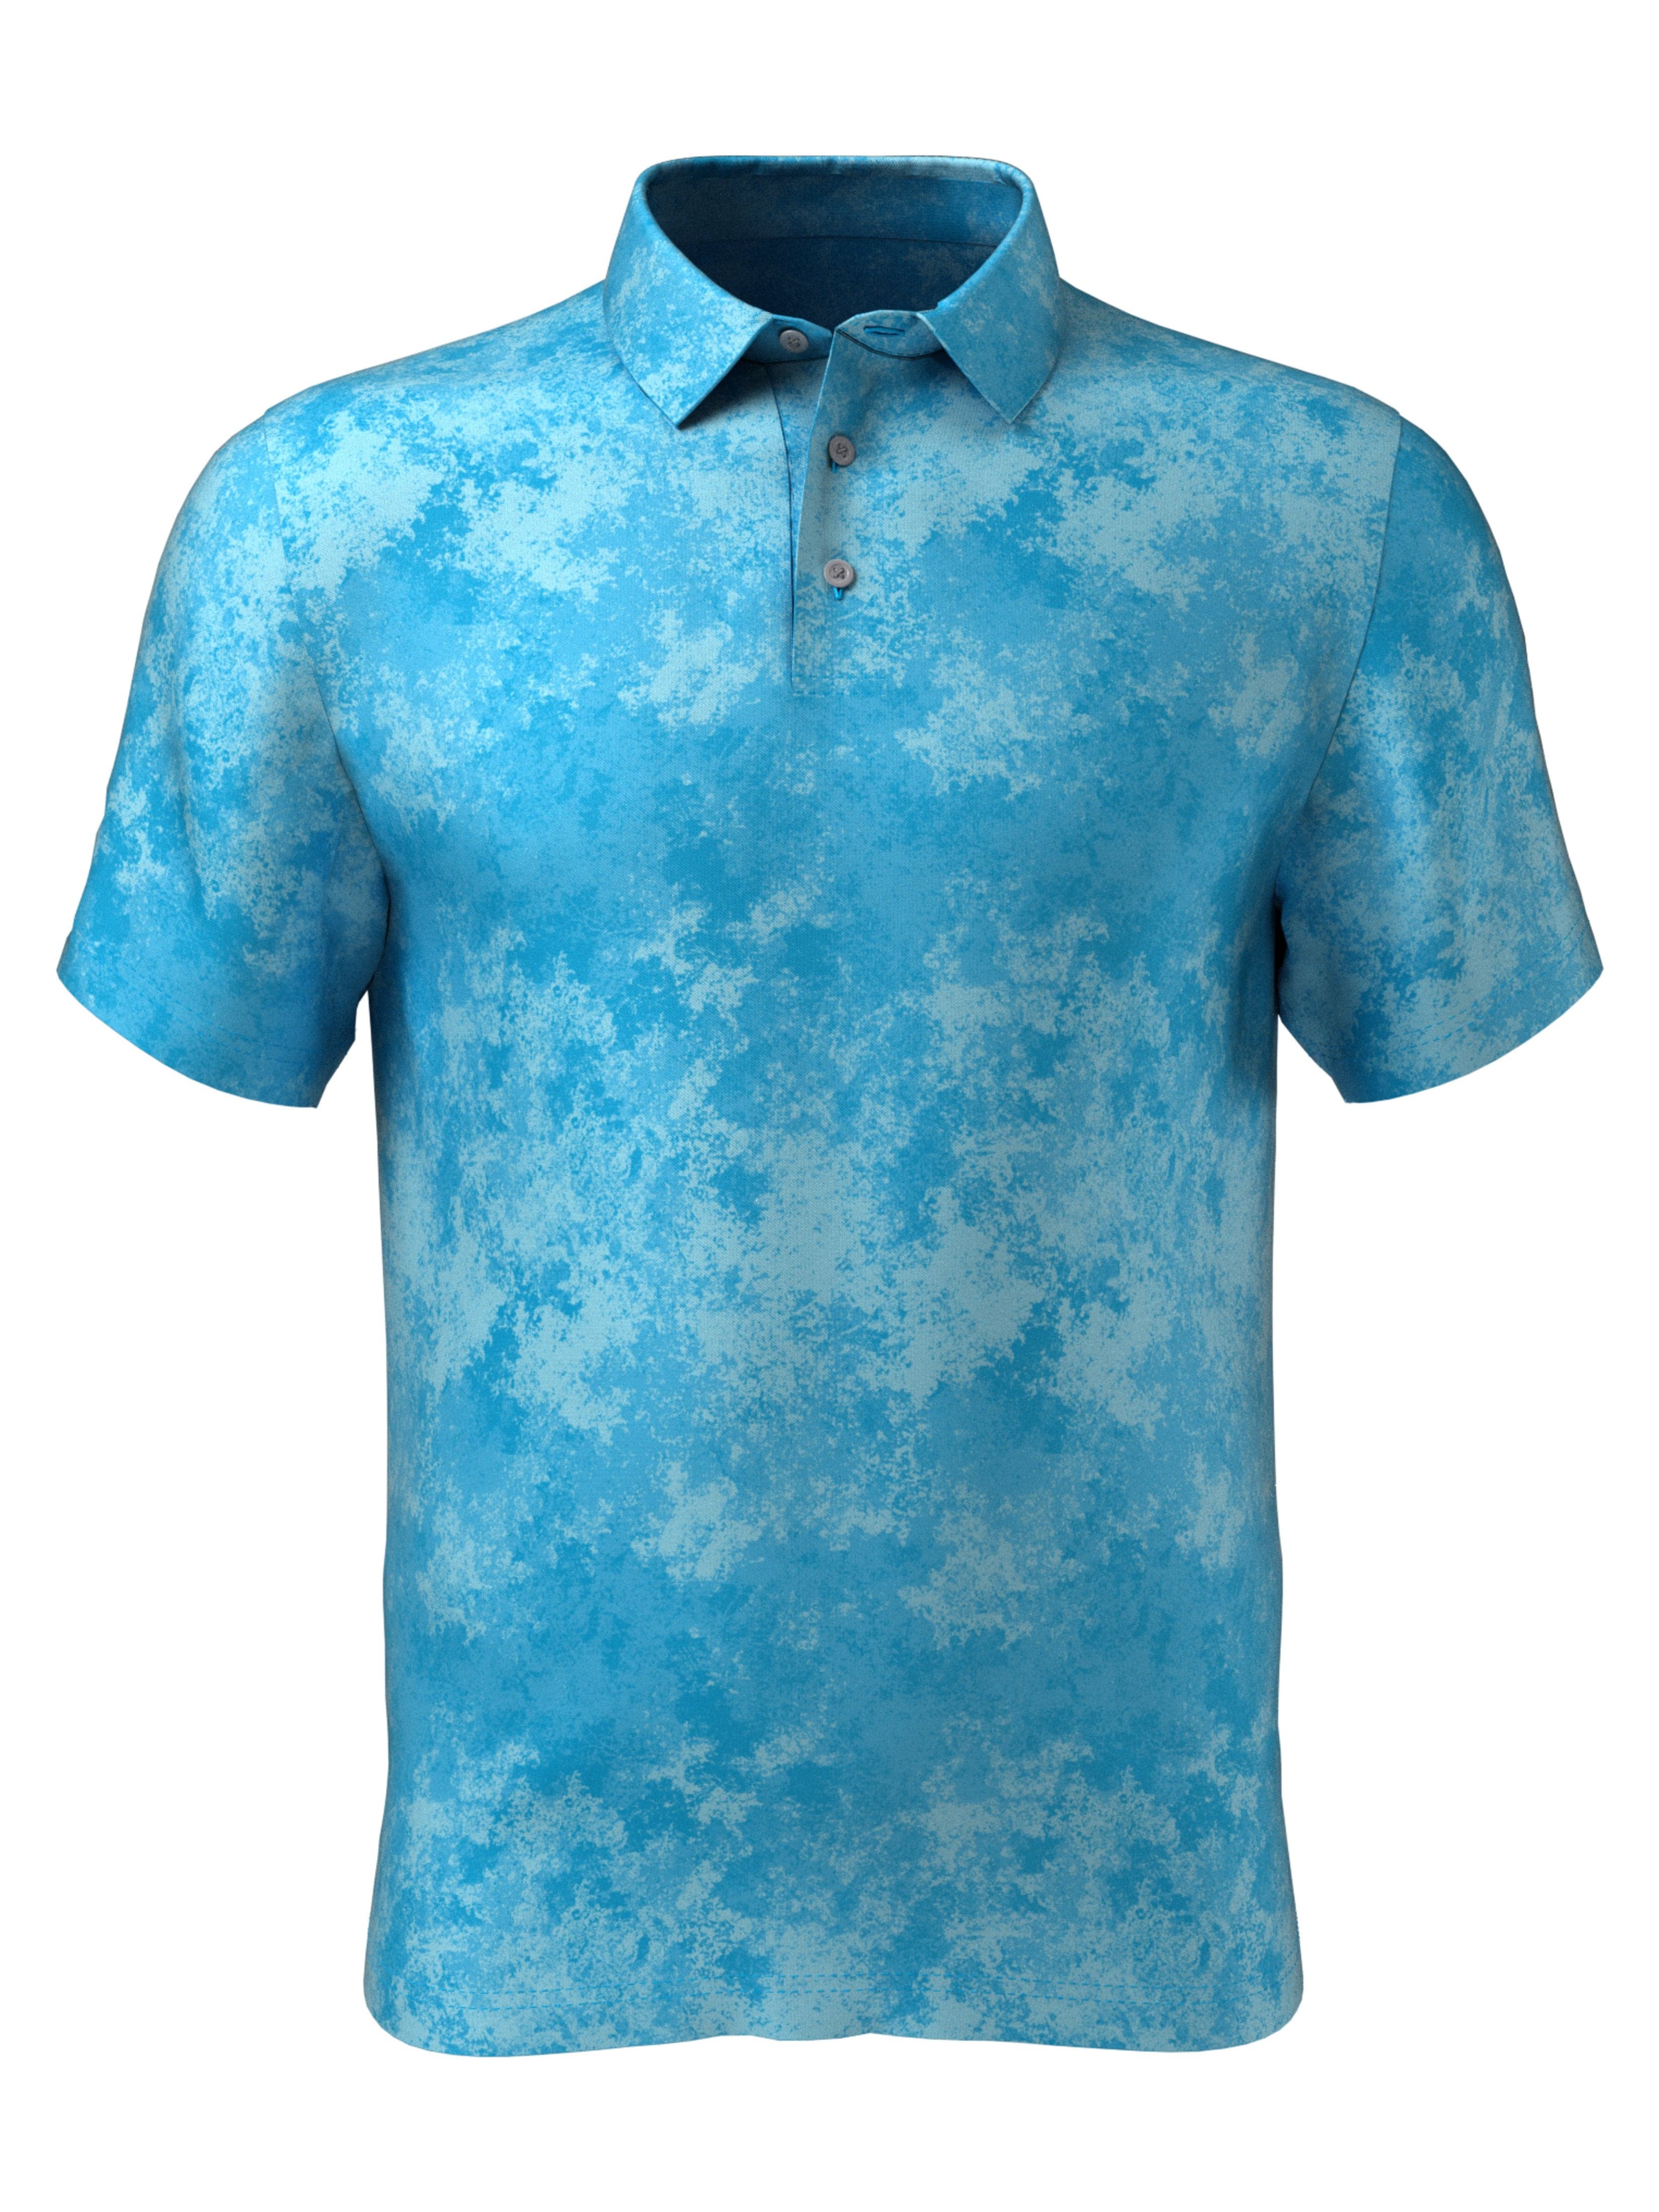 PGA TOUR Apparel Boys Natures Marble Print Polo Shirt, Size Medium, Blue Danub/Blue Topaz, 100% Polyester | Golf Apparel Shop